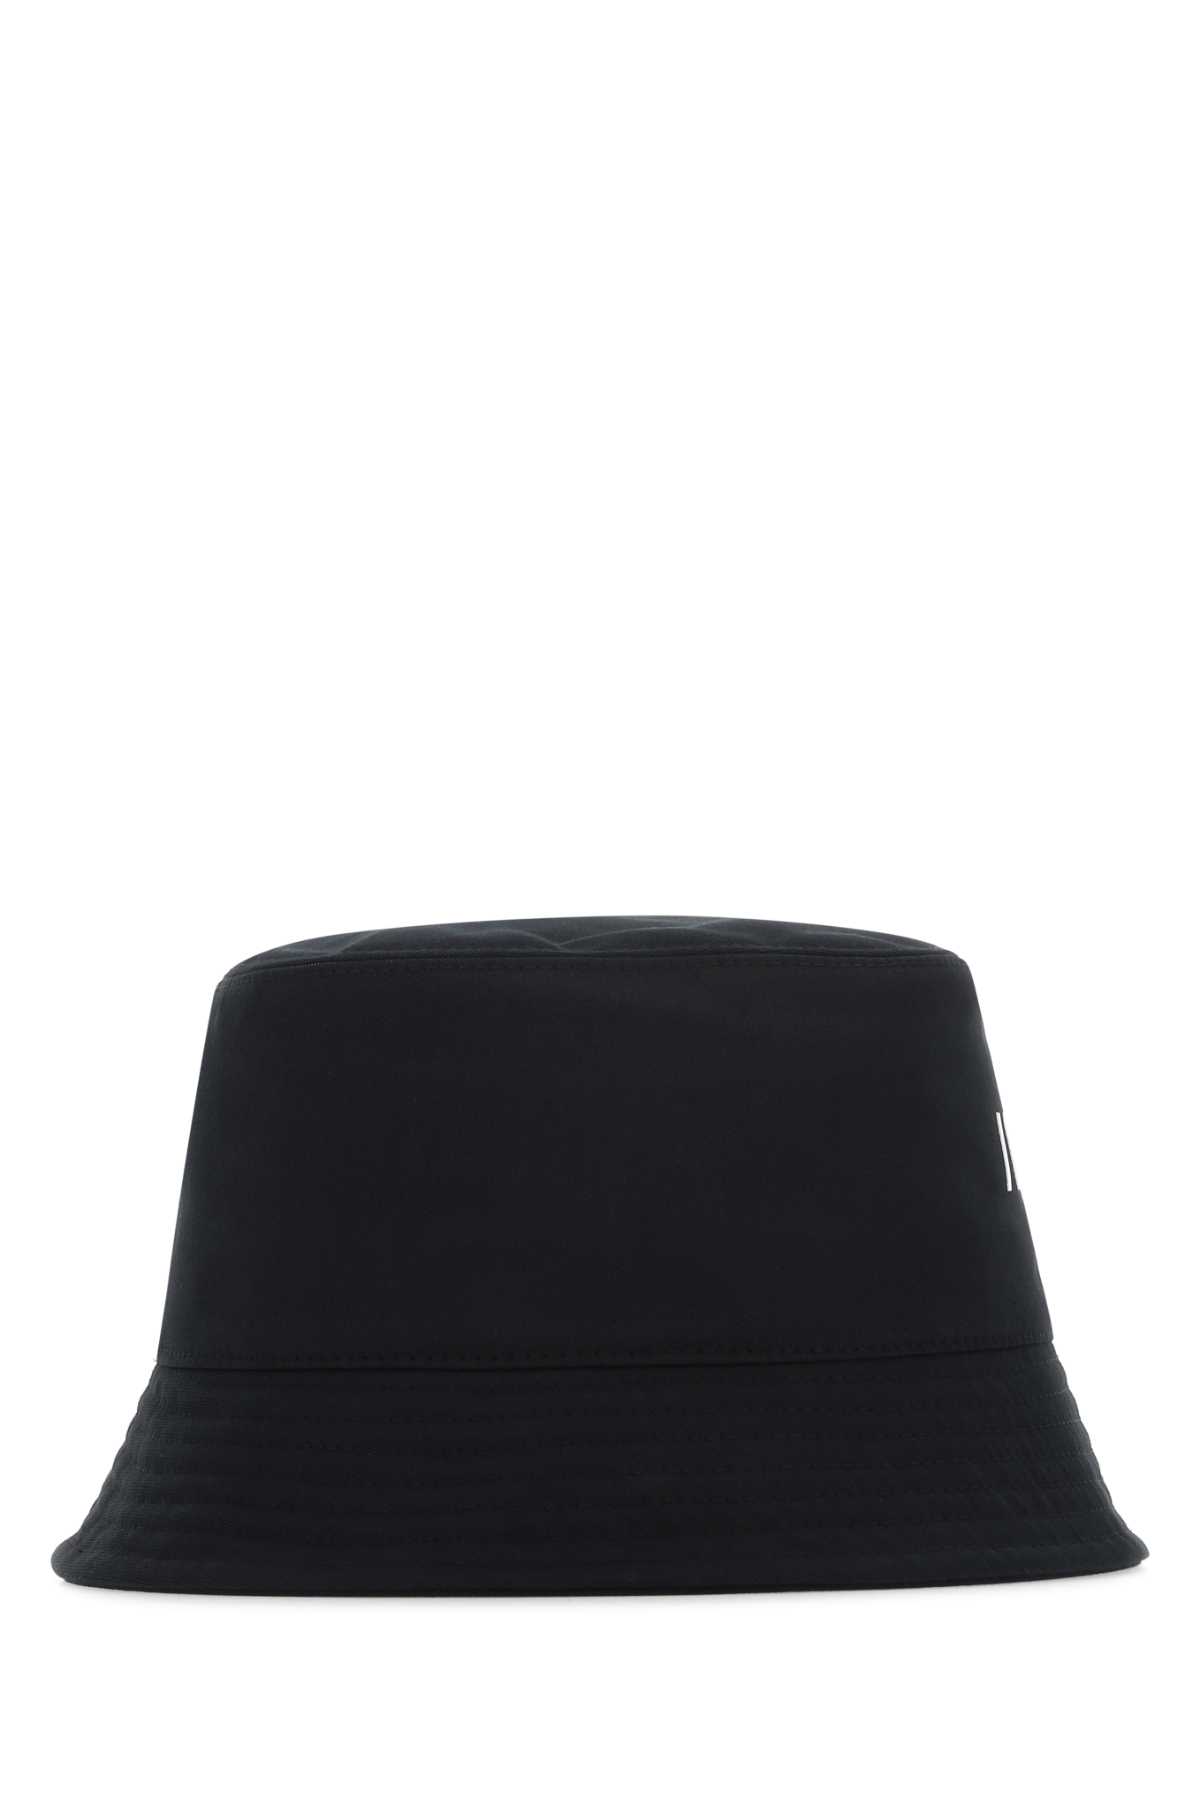 Dsquared2 Black Cotton Hat In M063